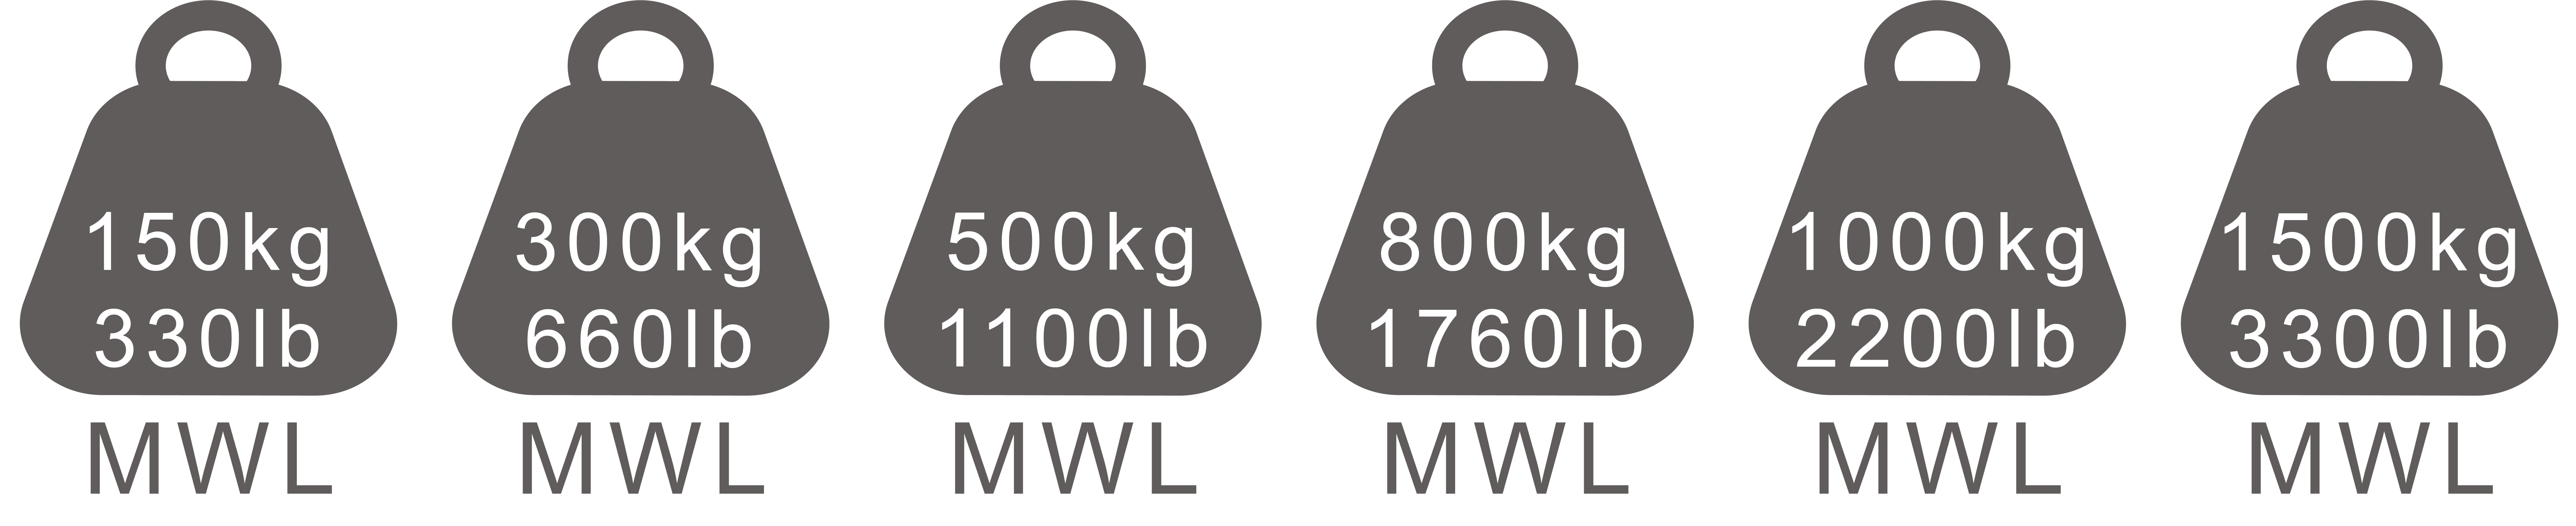 Maximum Weight Load Logo, 150kg to 1500kg